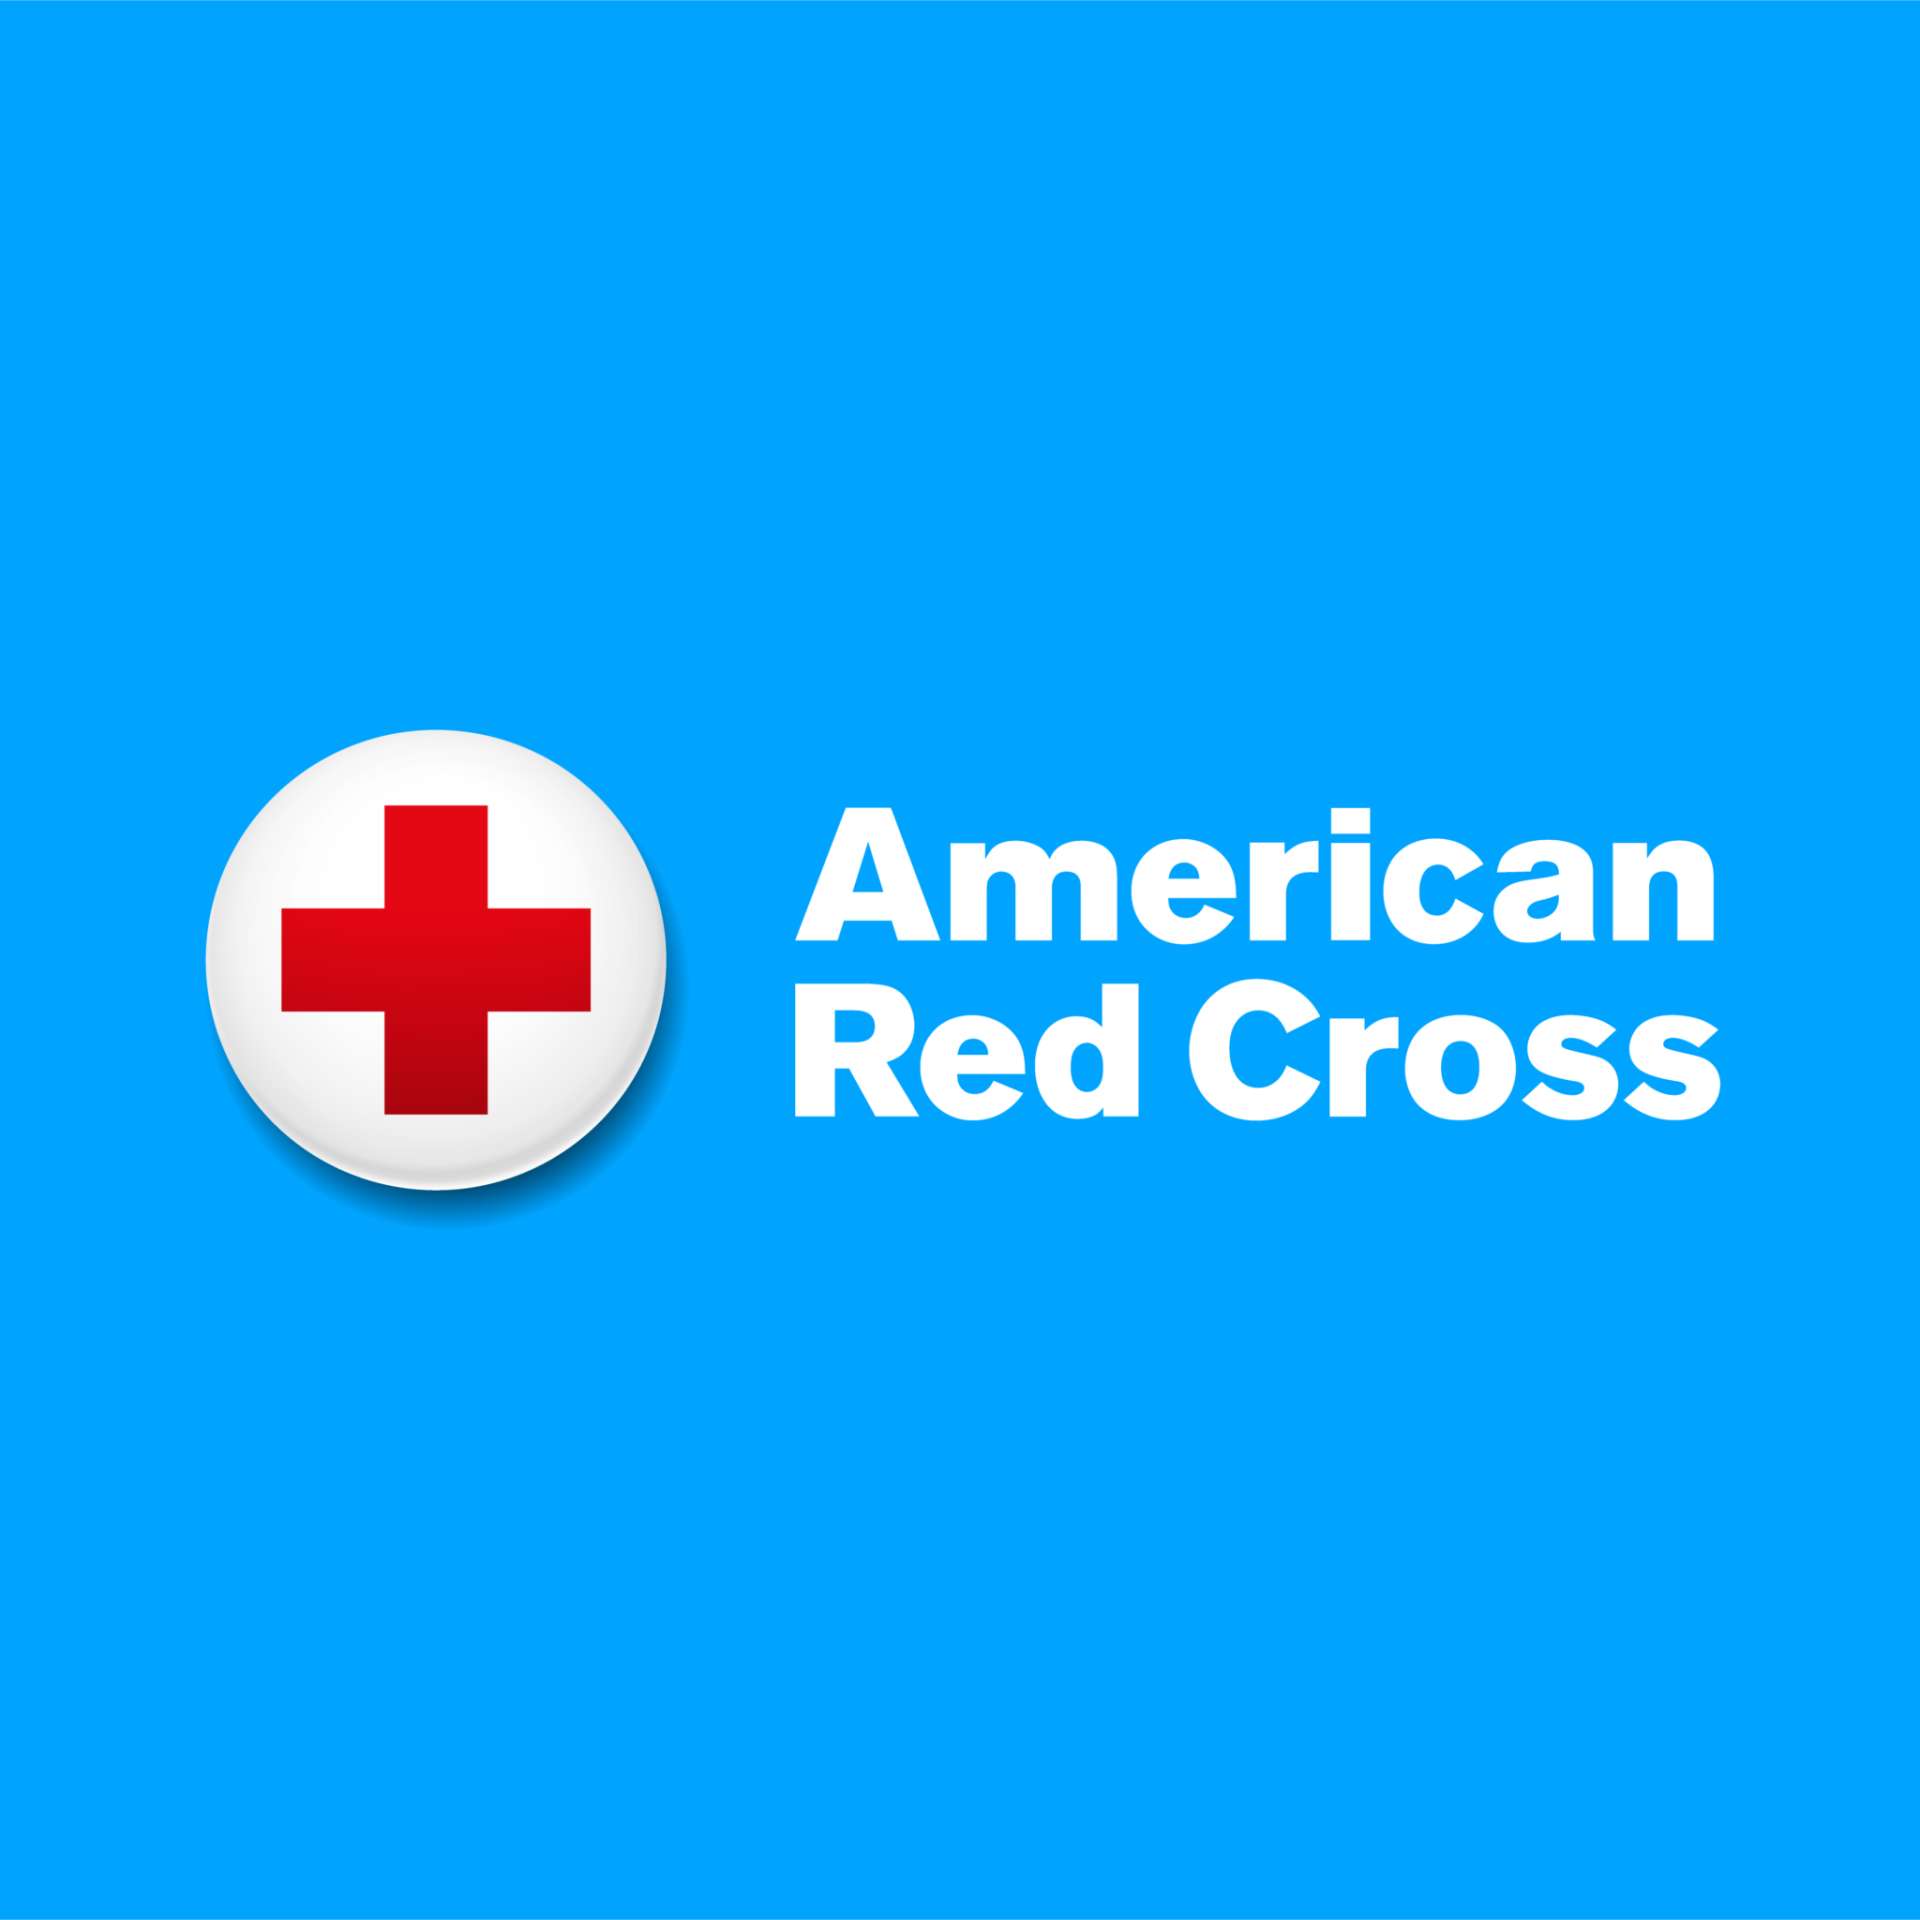 Gopuff x The American Red Cross logos